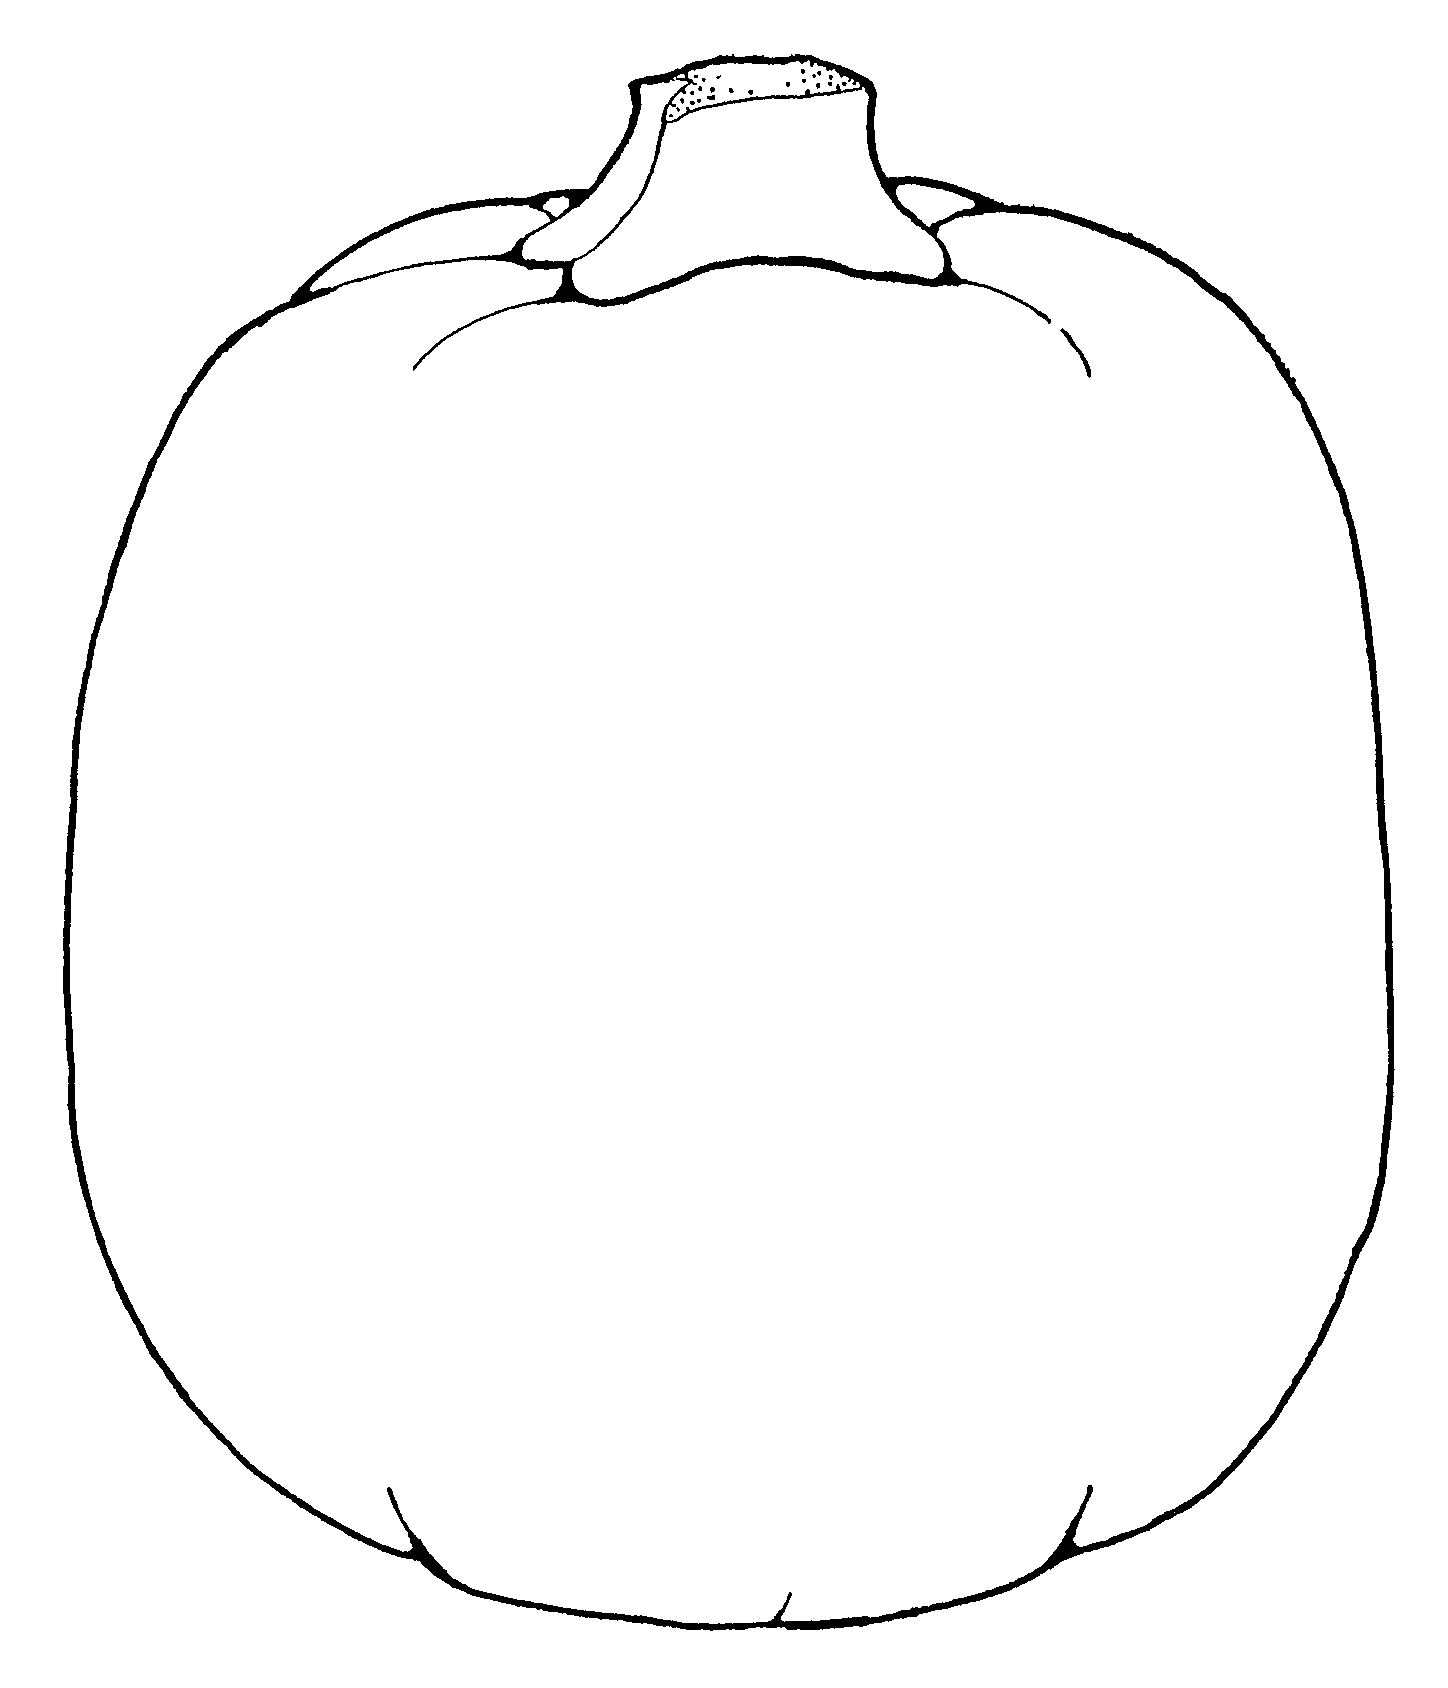 Pumpkin Outline Drawing - HalloweenFunky.com